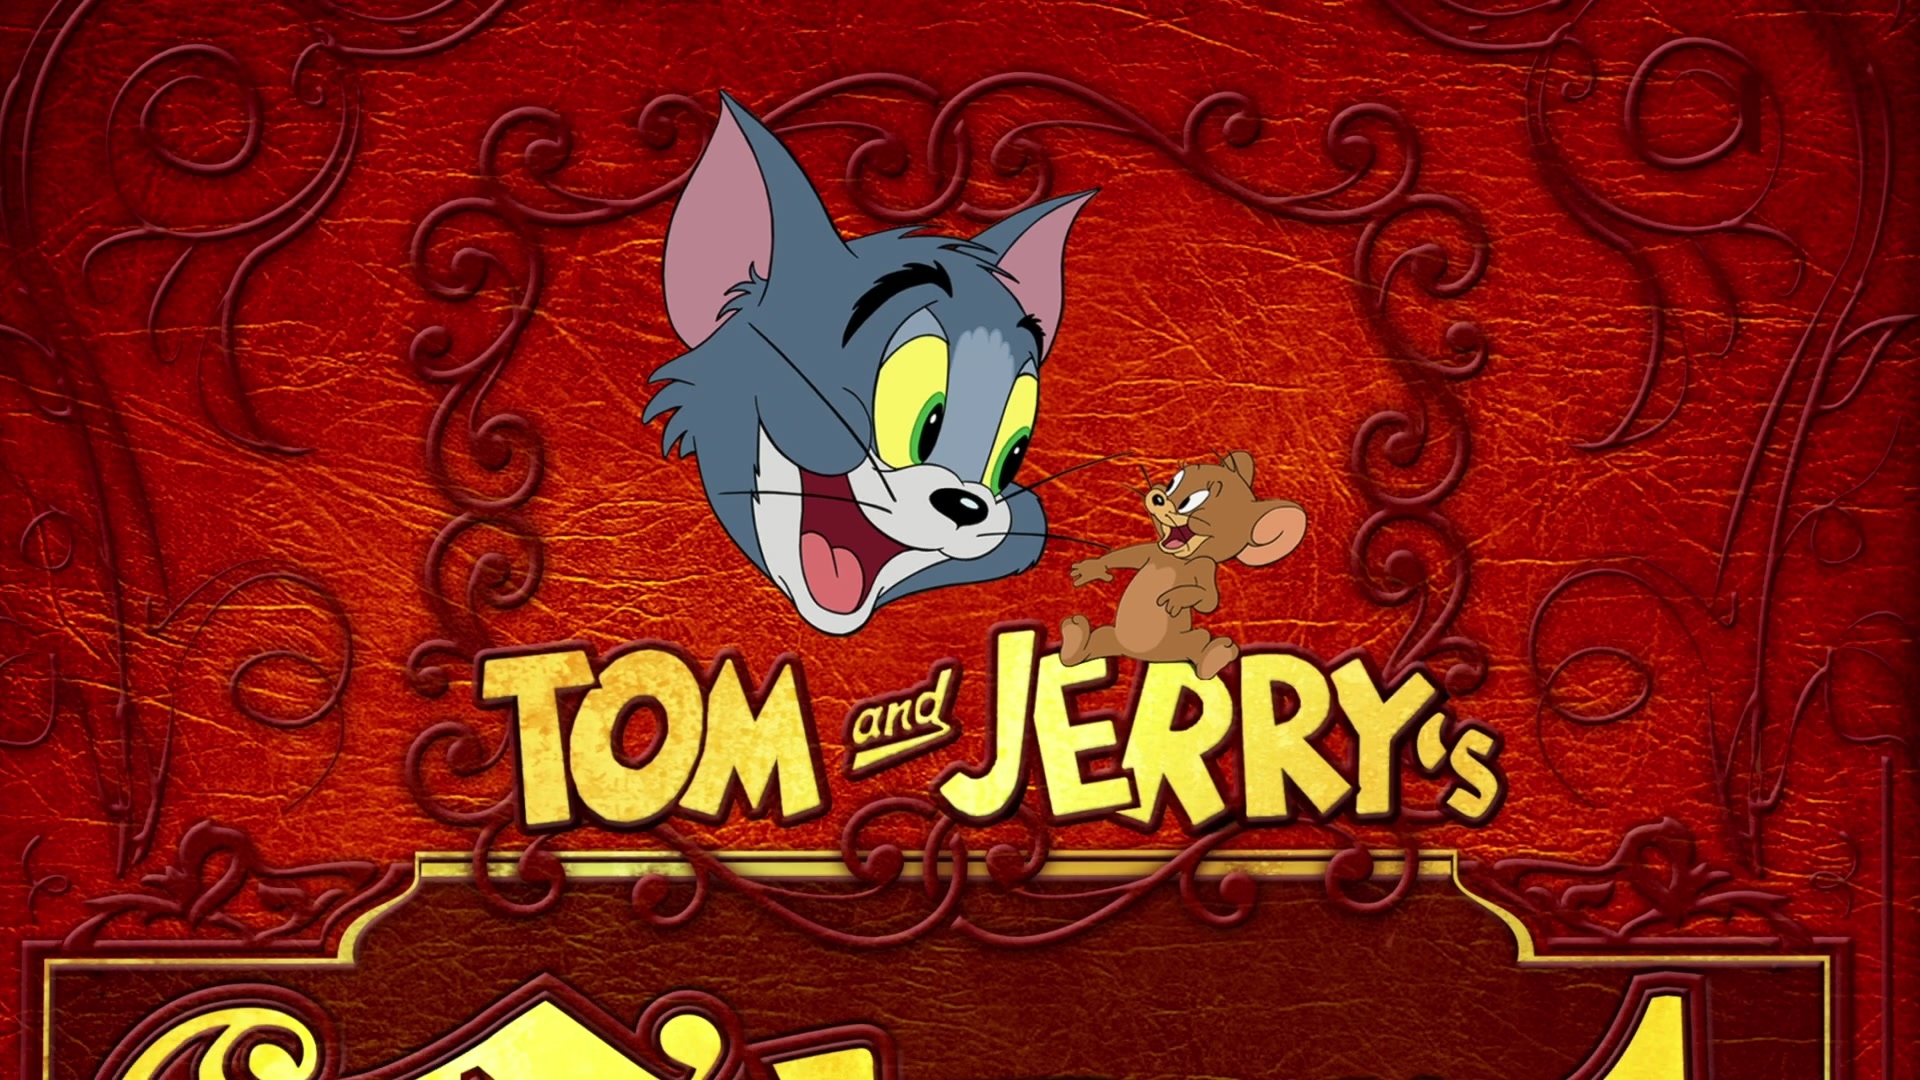 Том и джерри помощники. Том и Джерри 2021. Том и Джерри (Tom and Jerry) 1940. Картинки Тома и Джерри.